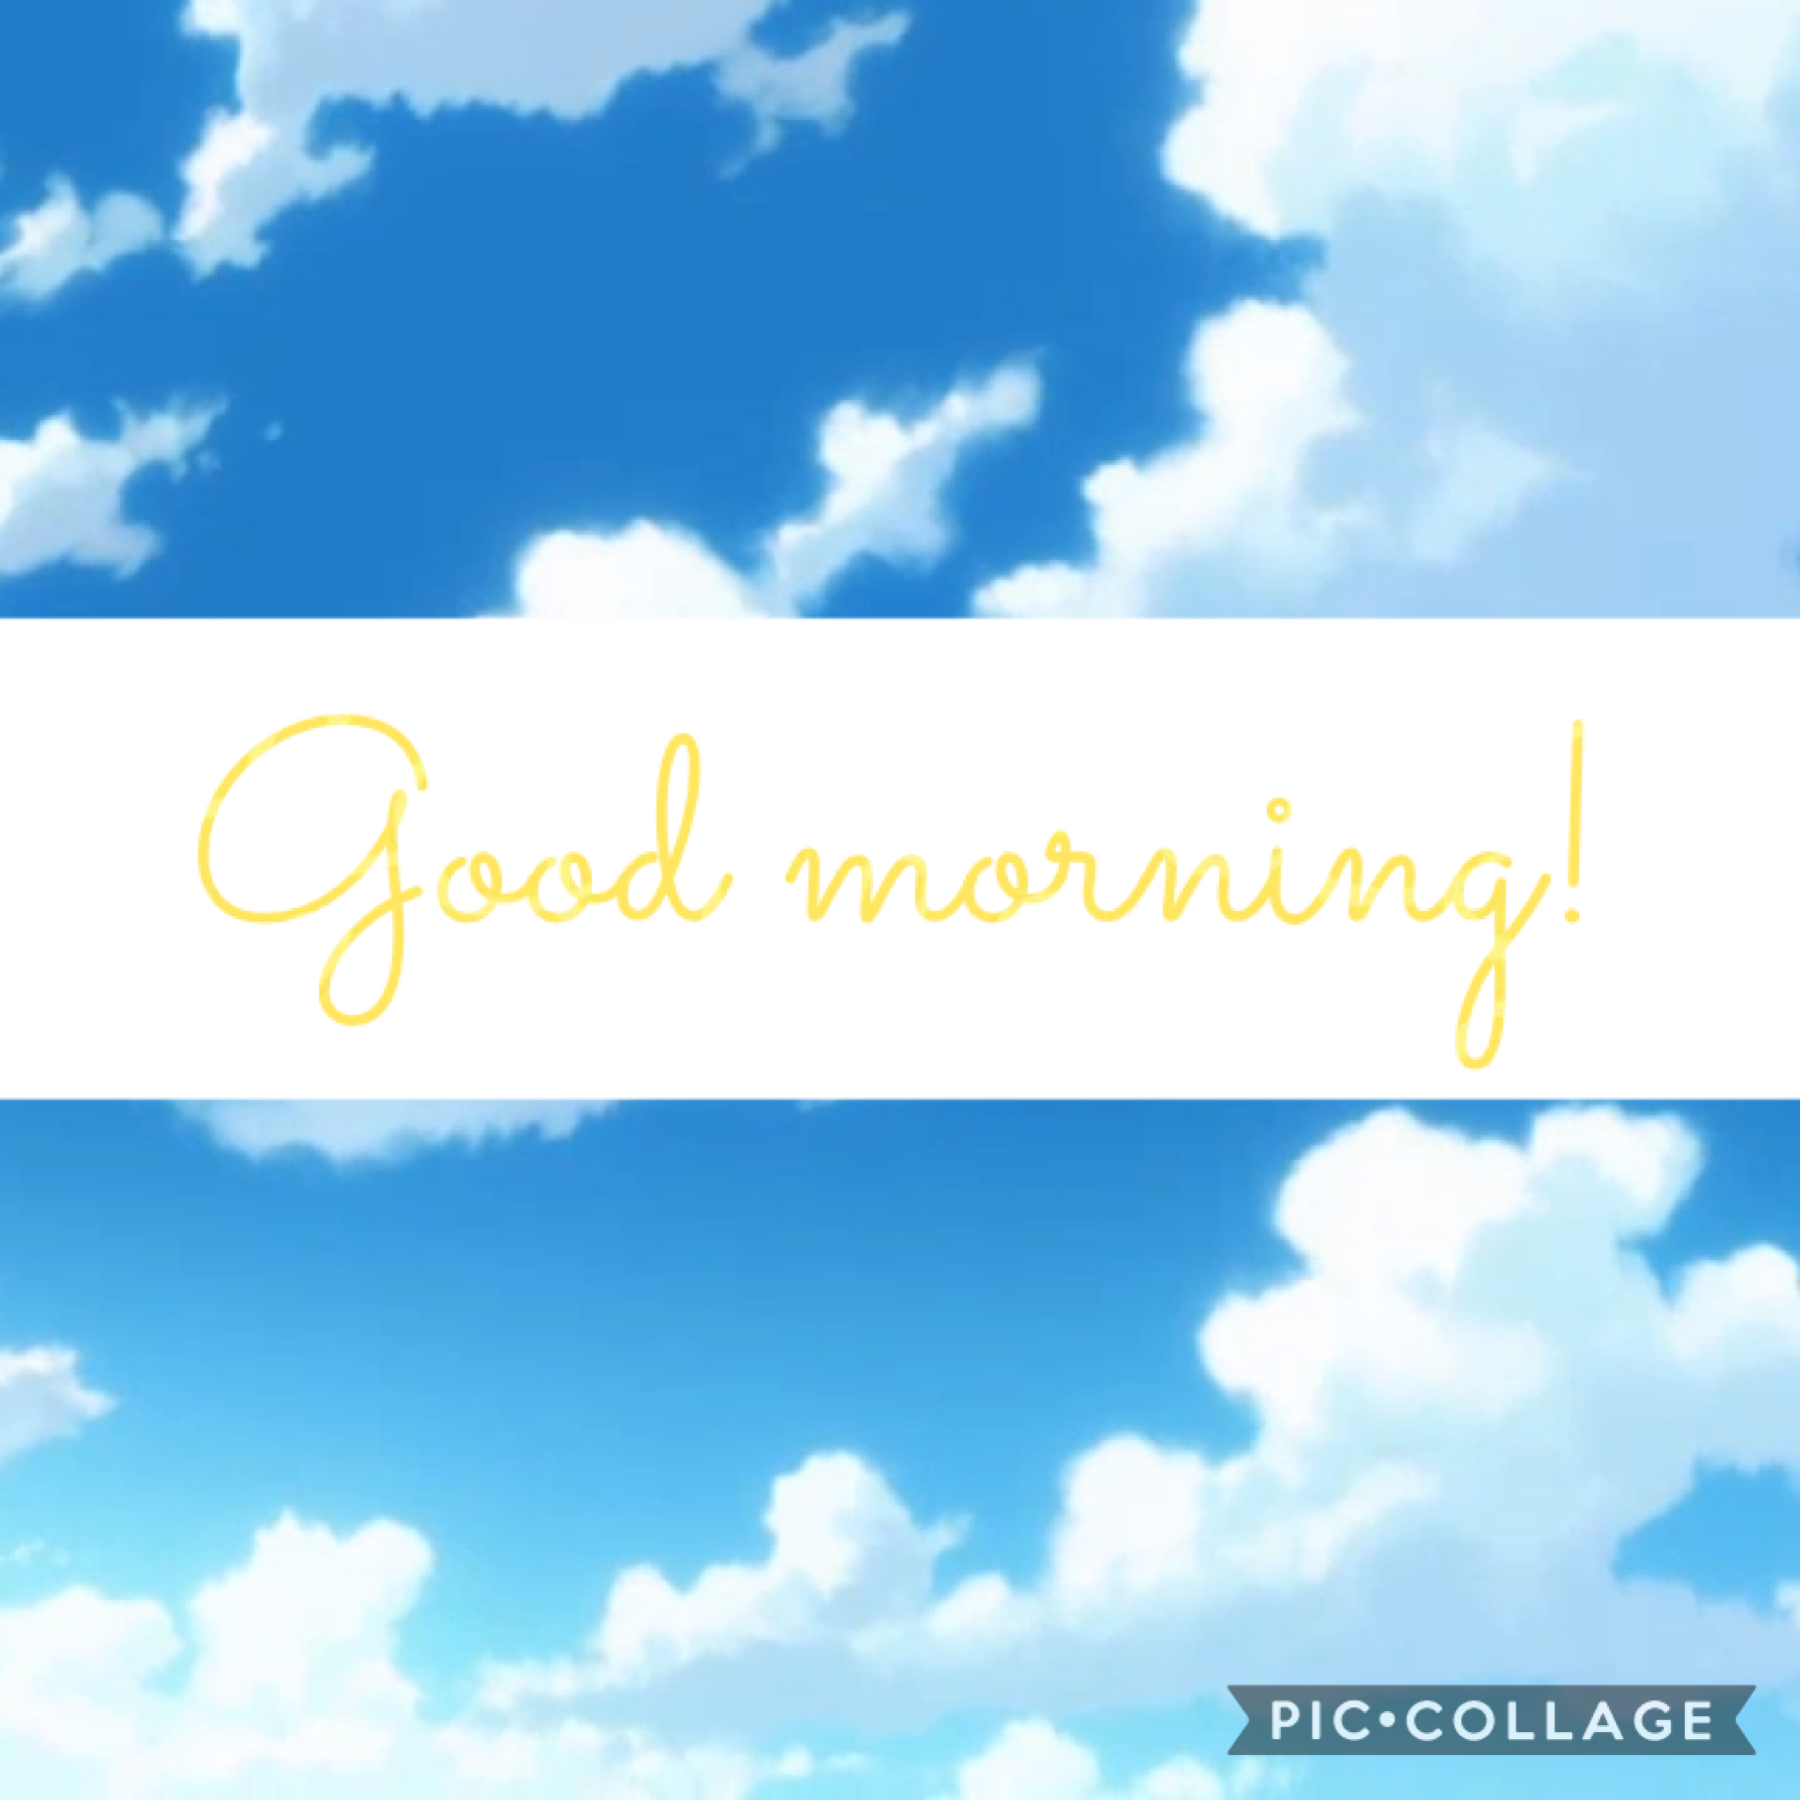 Good morning people!